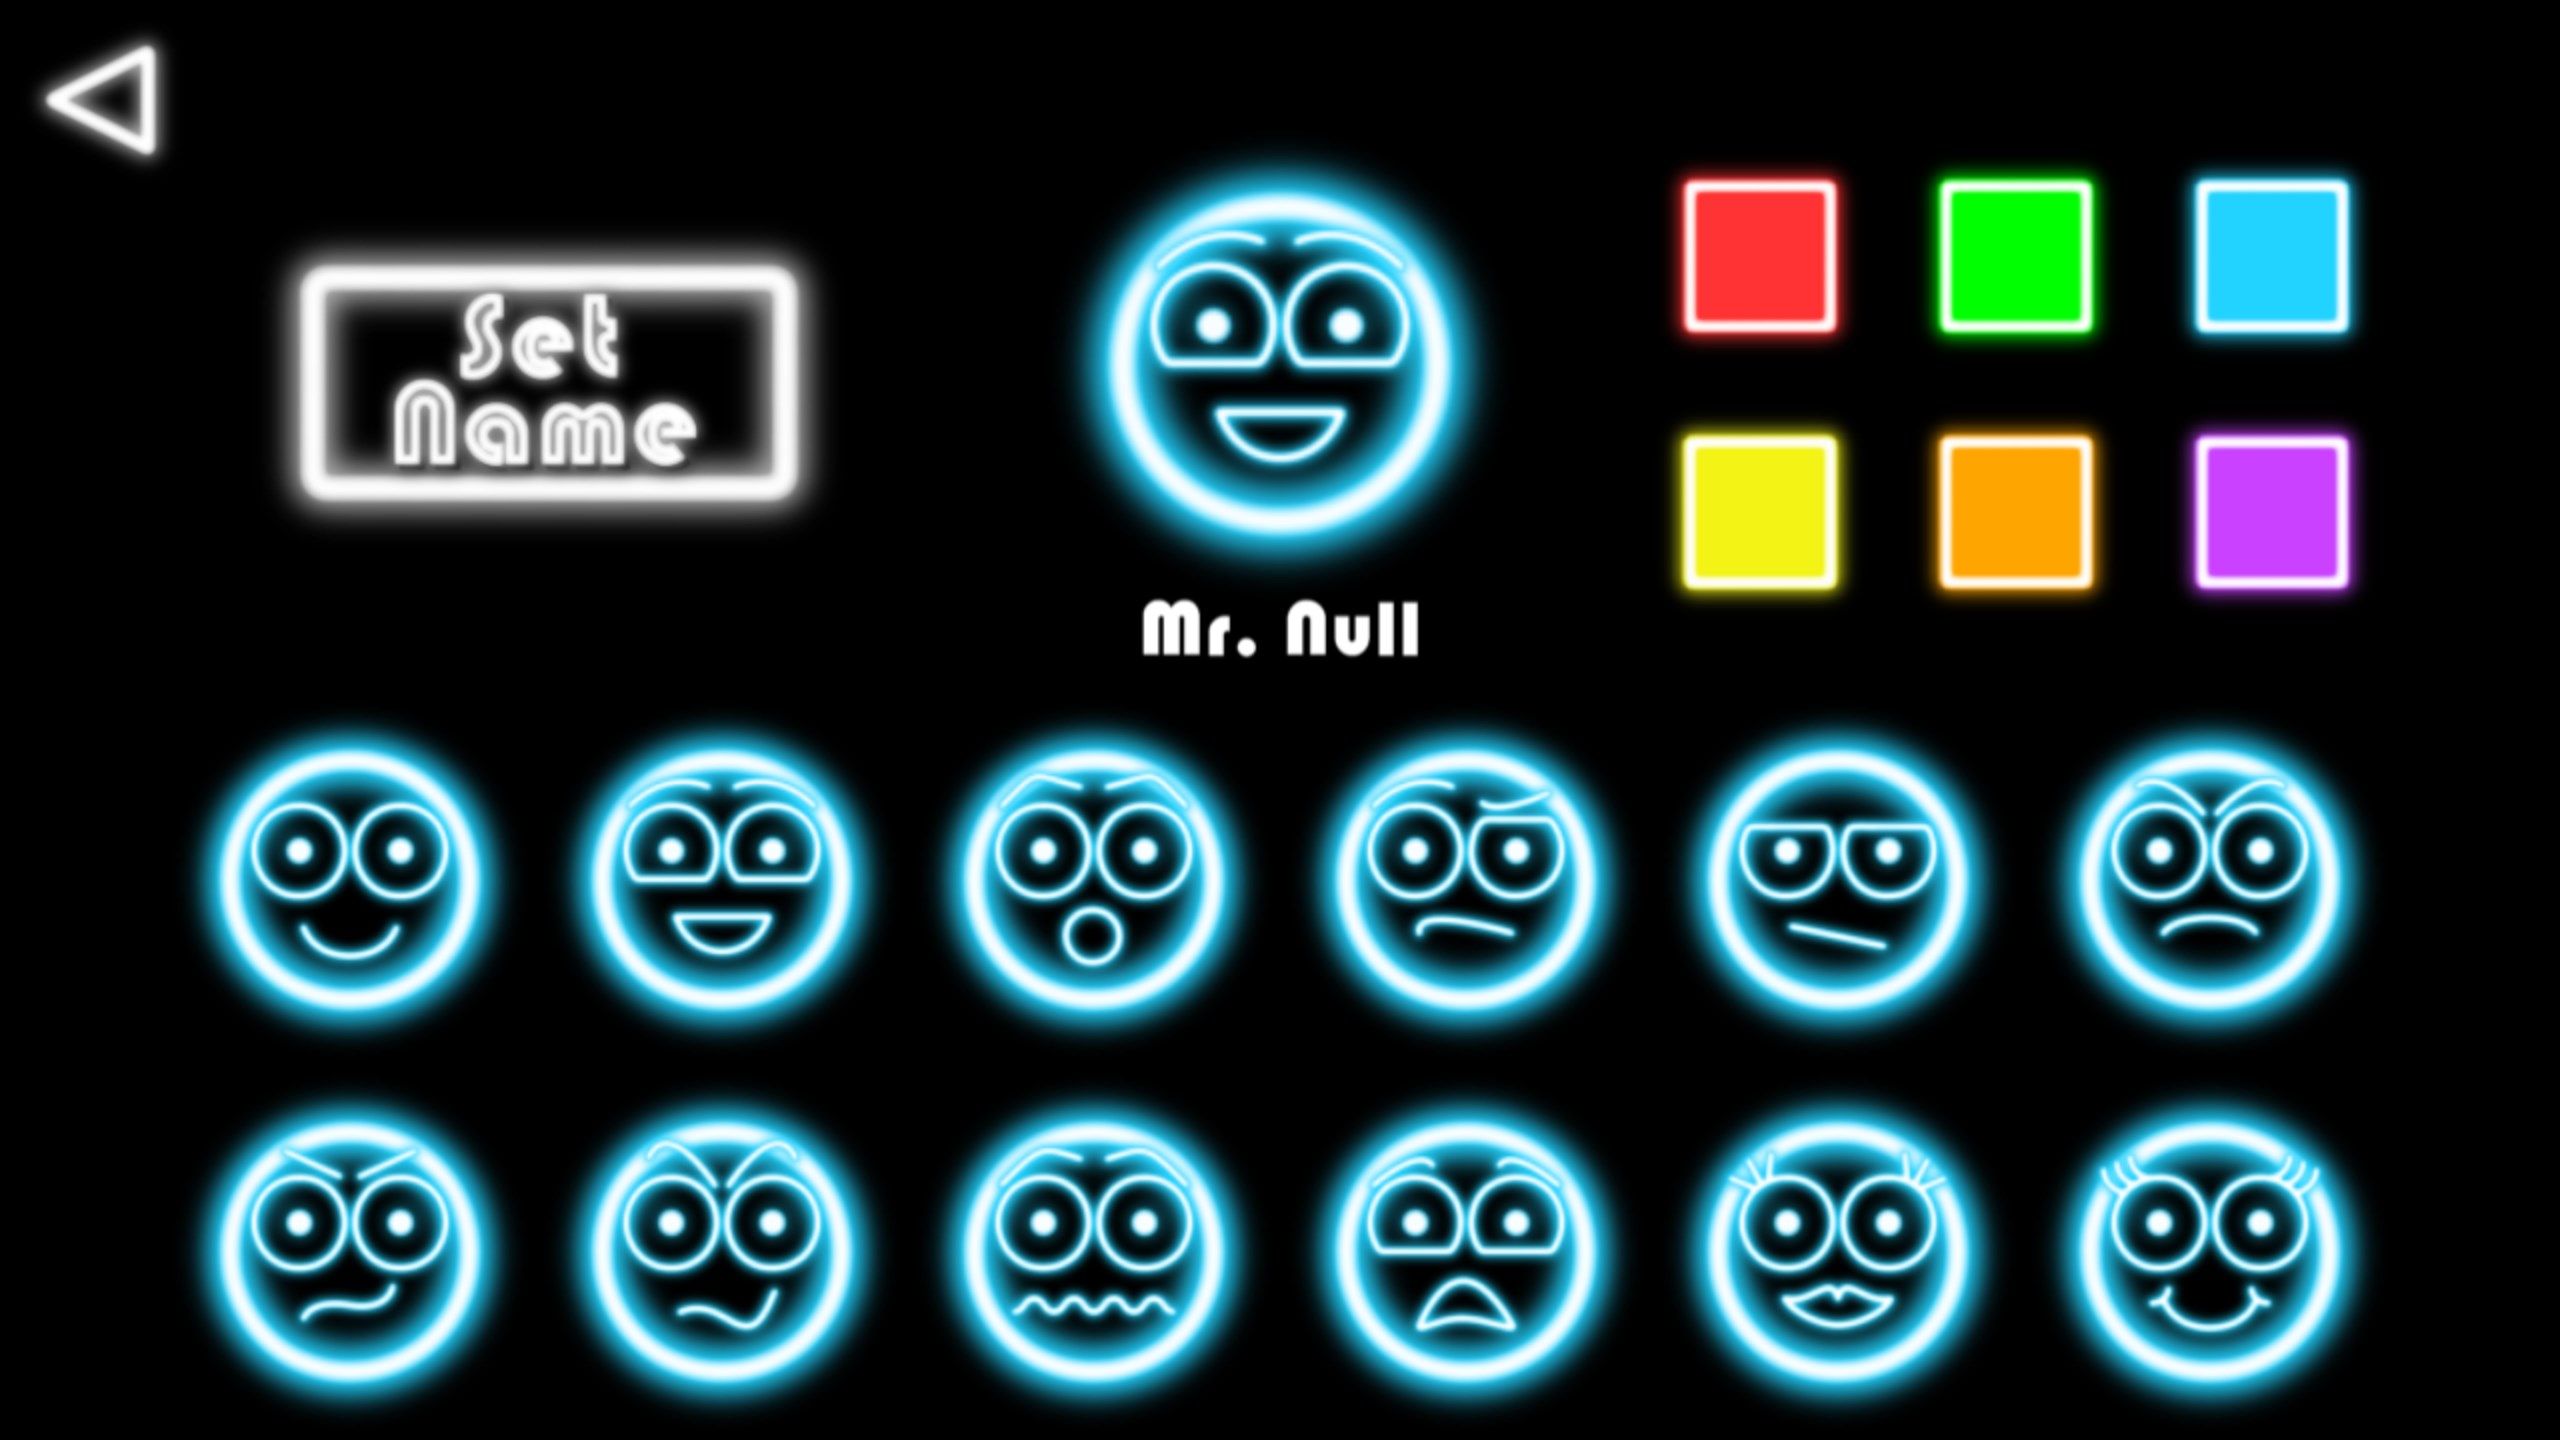 Neon Party Games Controller